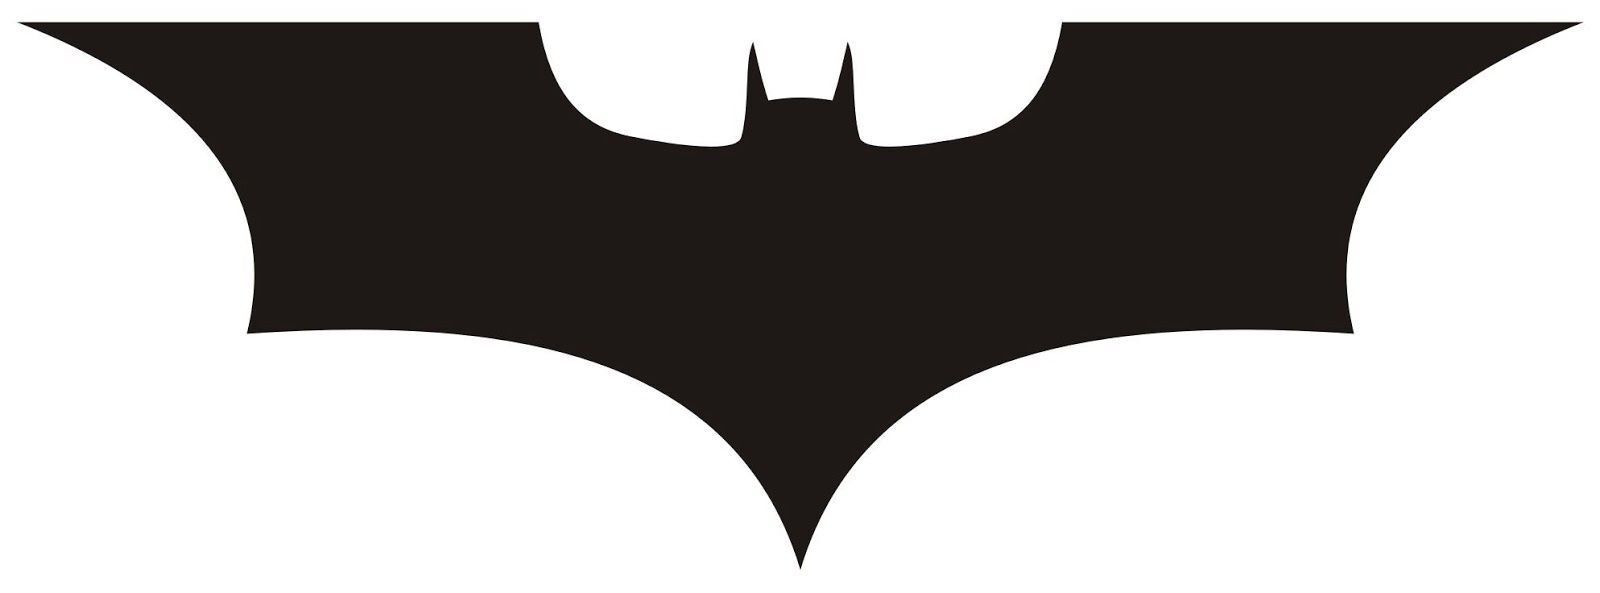  DARK KNIGHT LOGO Batman Car Truck Vinyl Decal Sticker iPhone Gift Laptop Comic